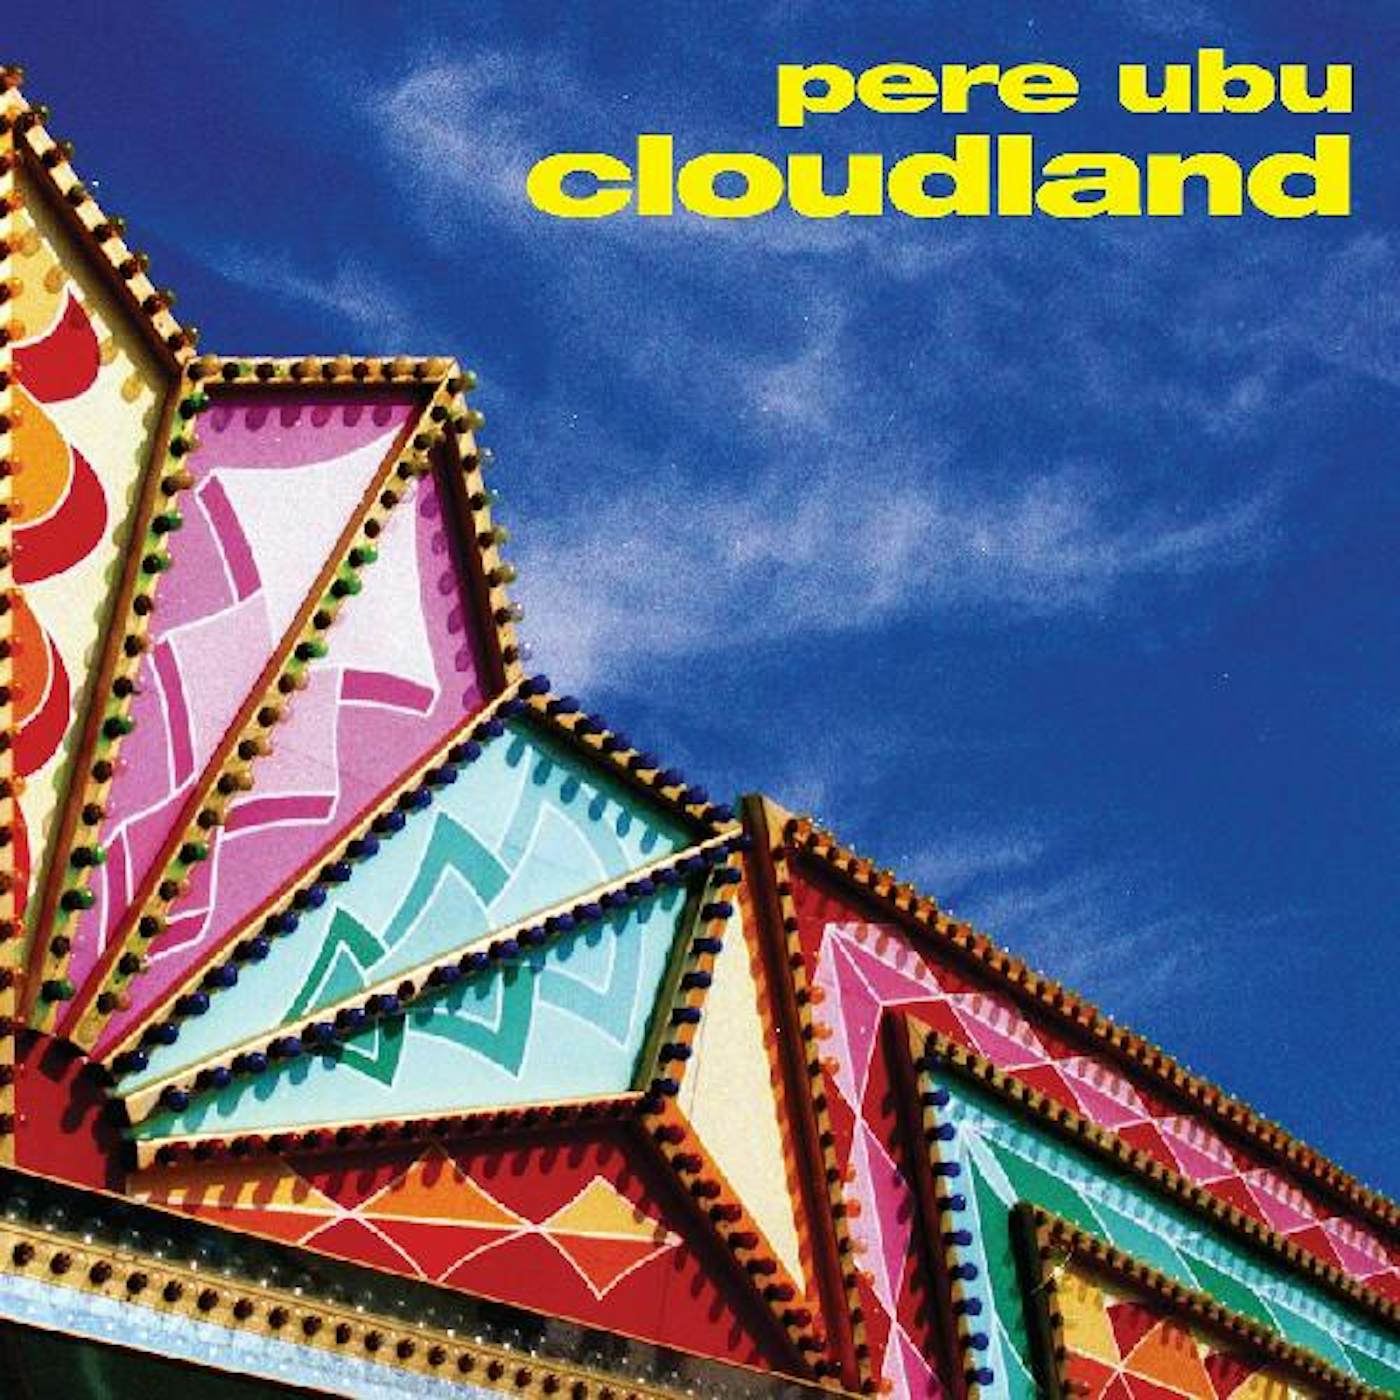 Pere Ubu Cloudland Vinyl Record